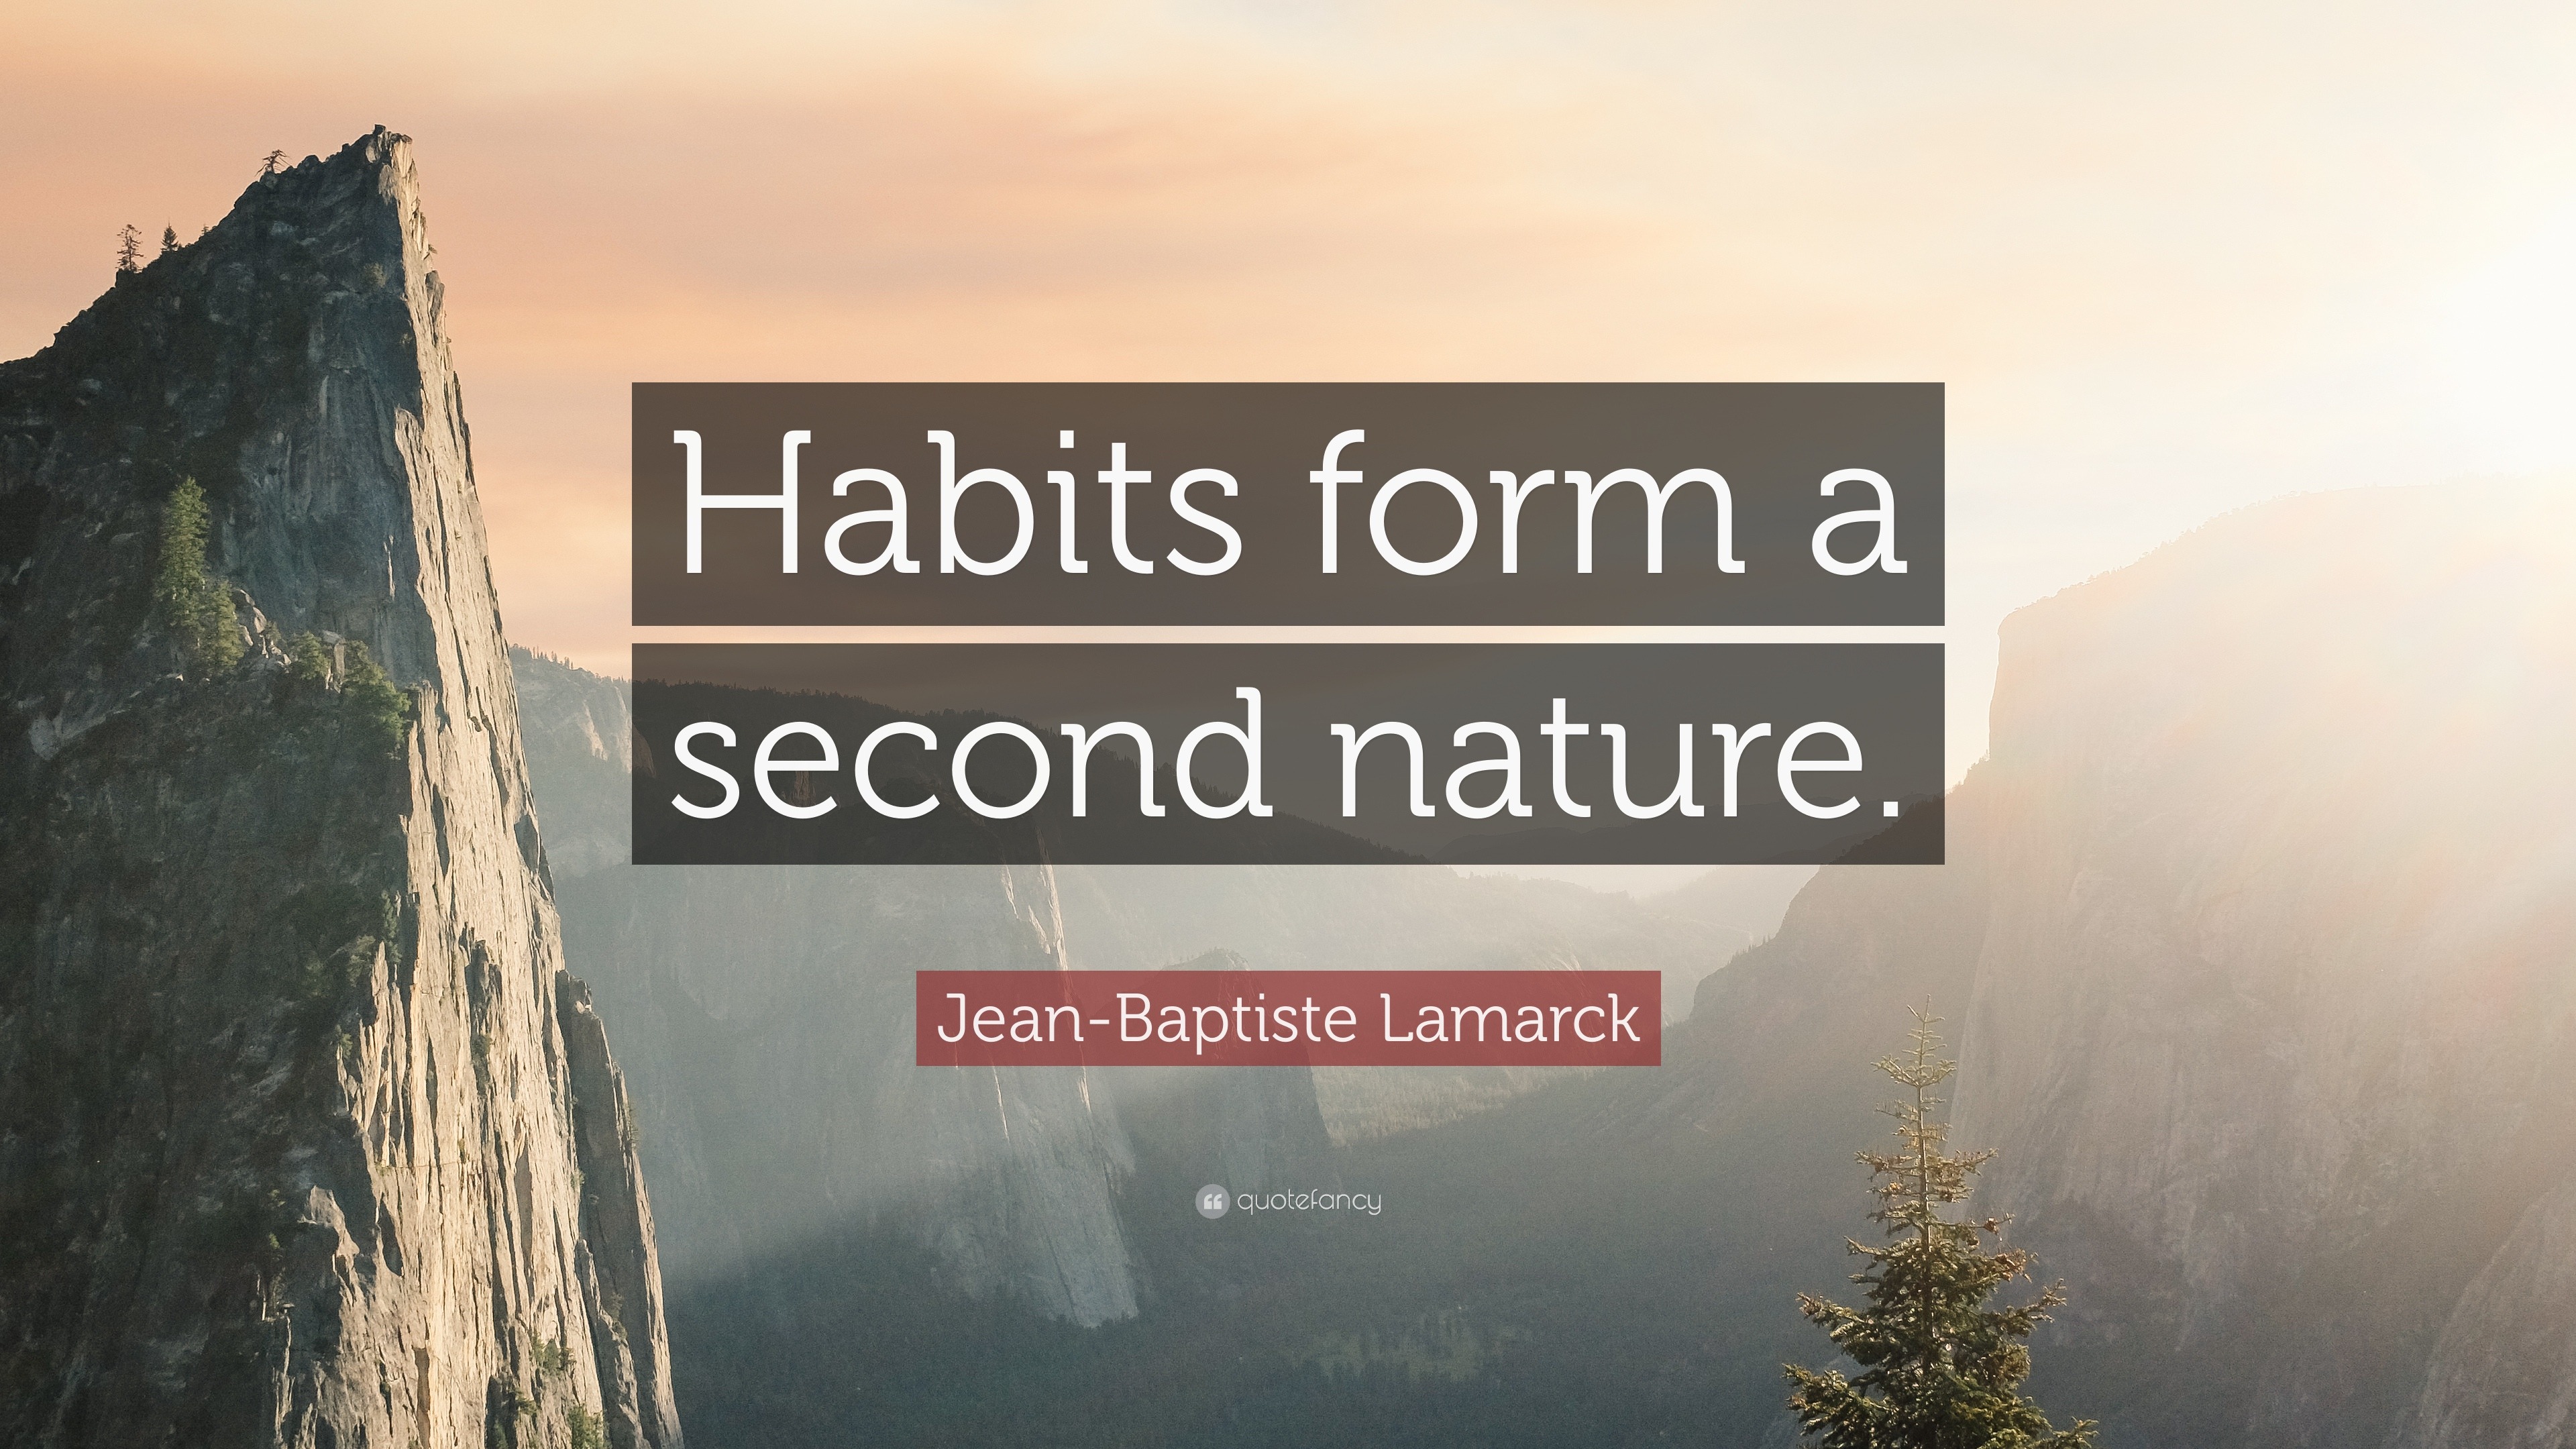 Jean-Baptiste Lamarck “Habits form a second